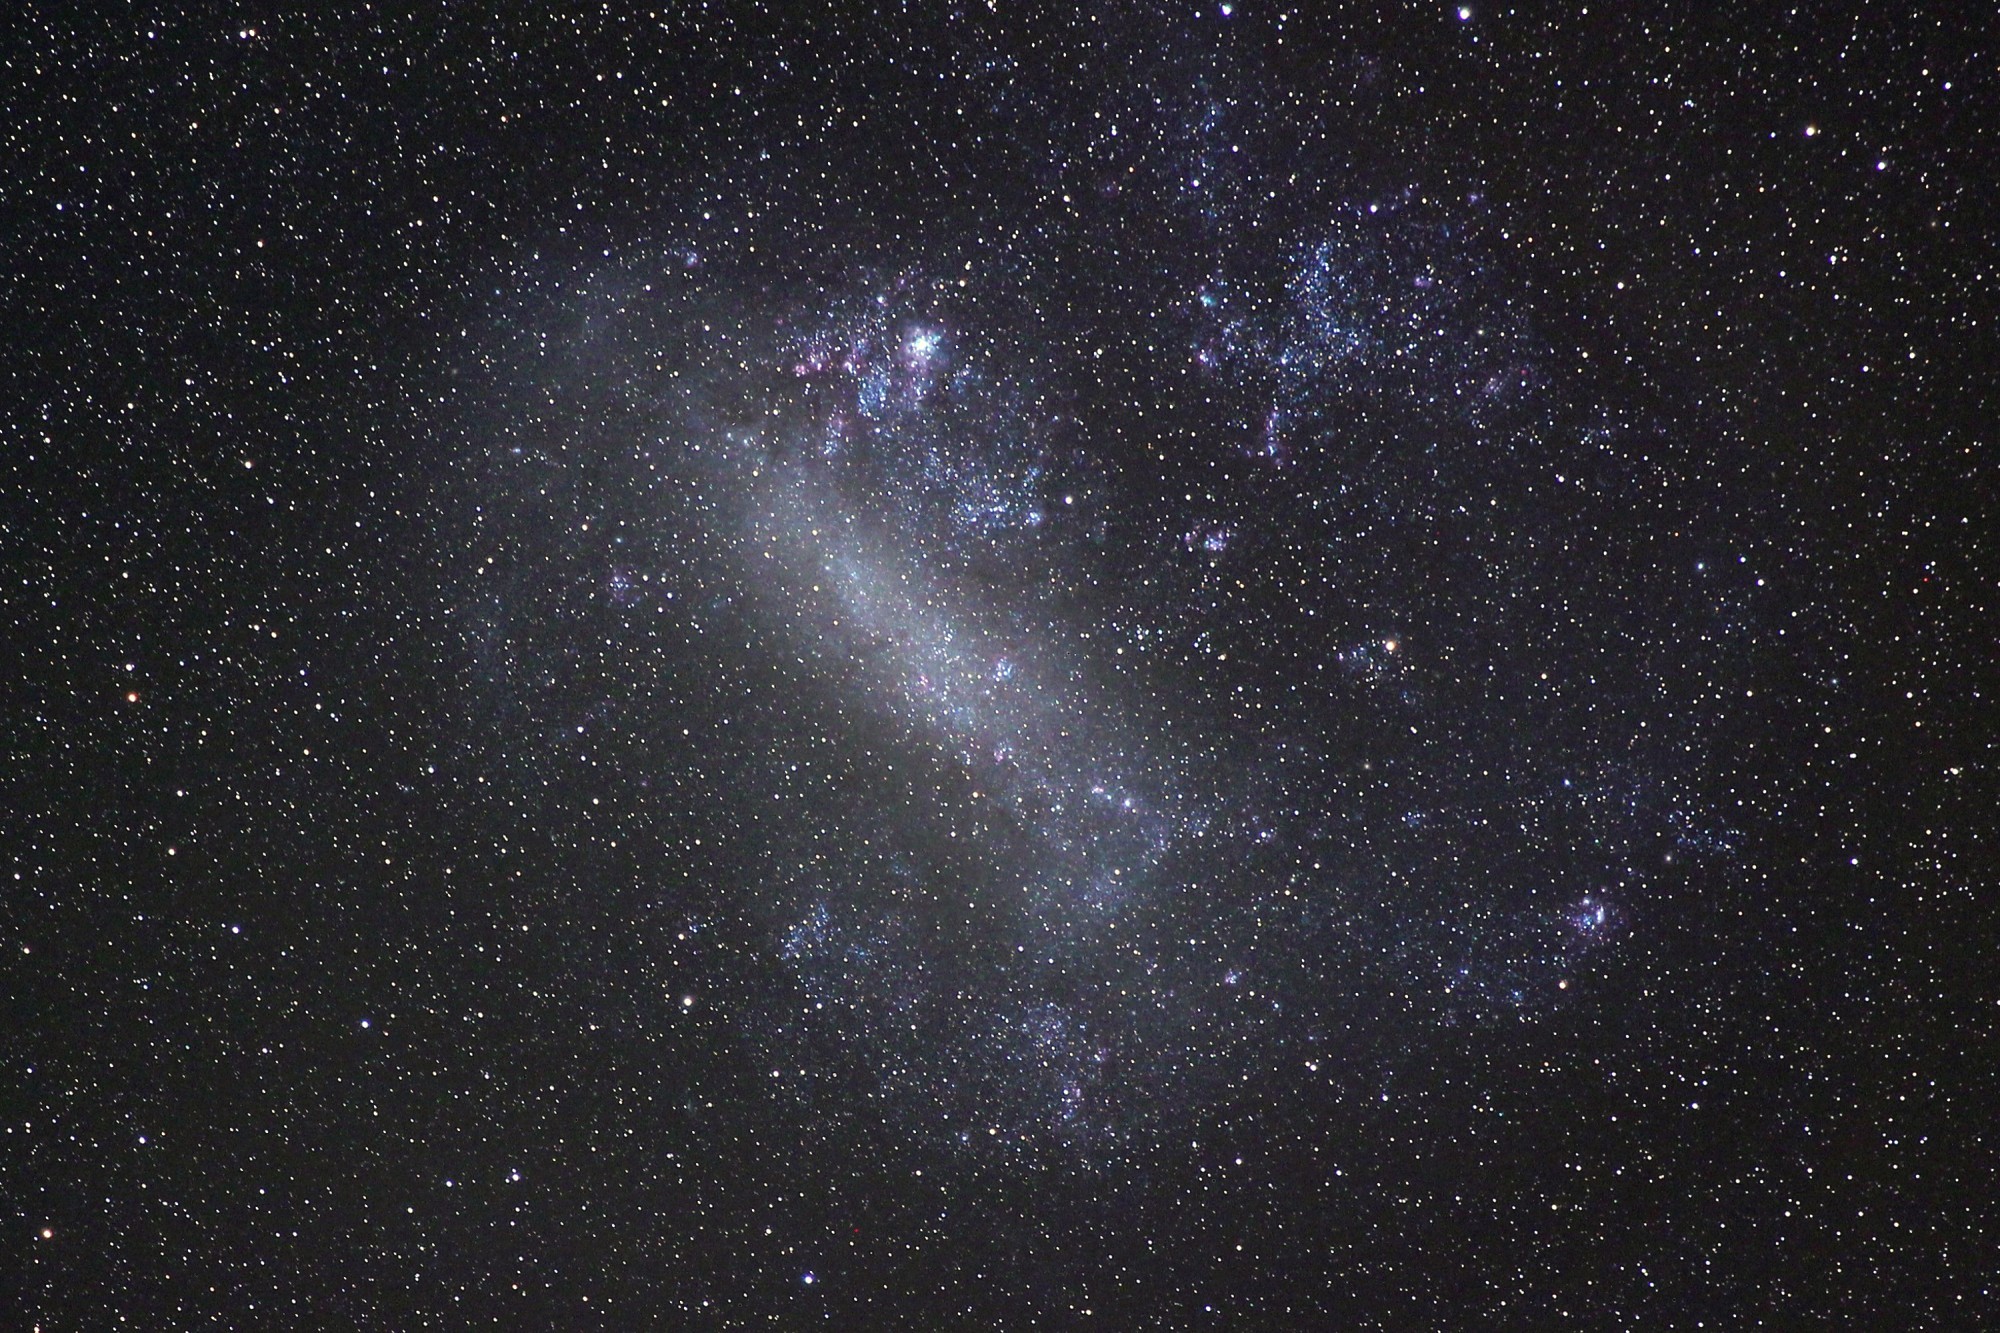 [The Large Magellanic Cloud]